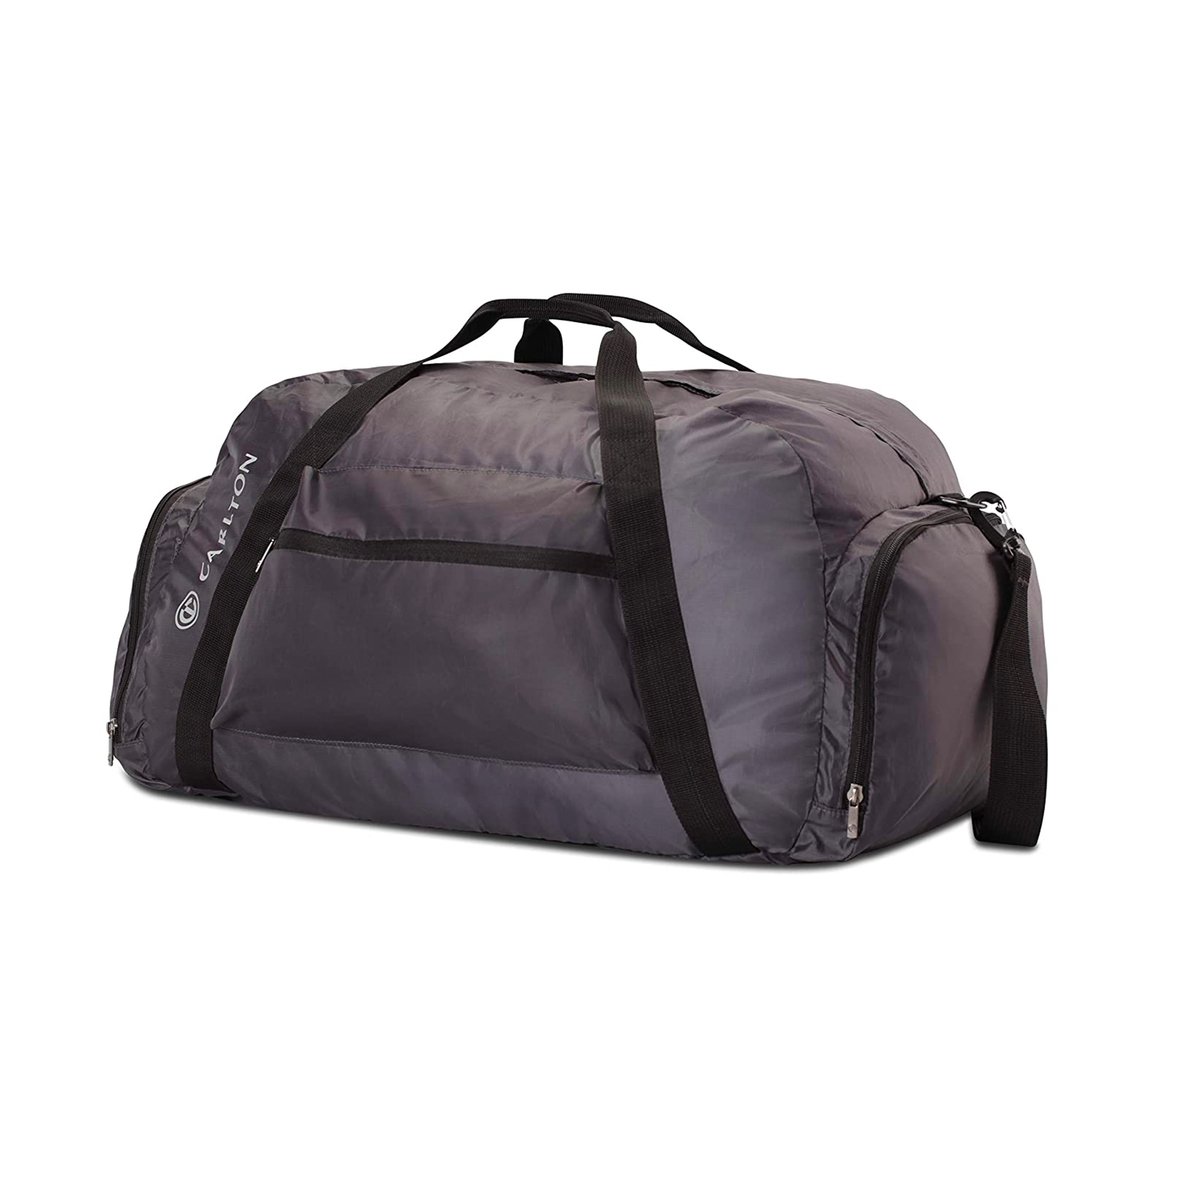 Carlton Foldable Duffle Bag Grey Online at Best Price | Travel Bags ...